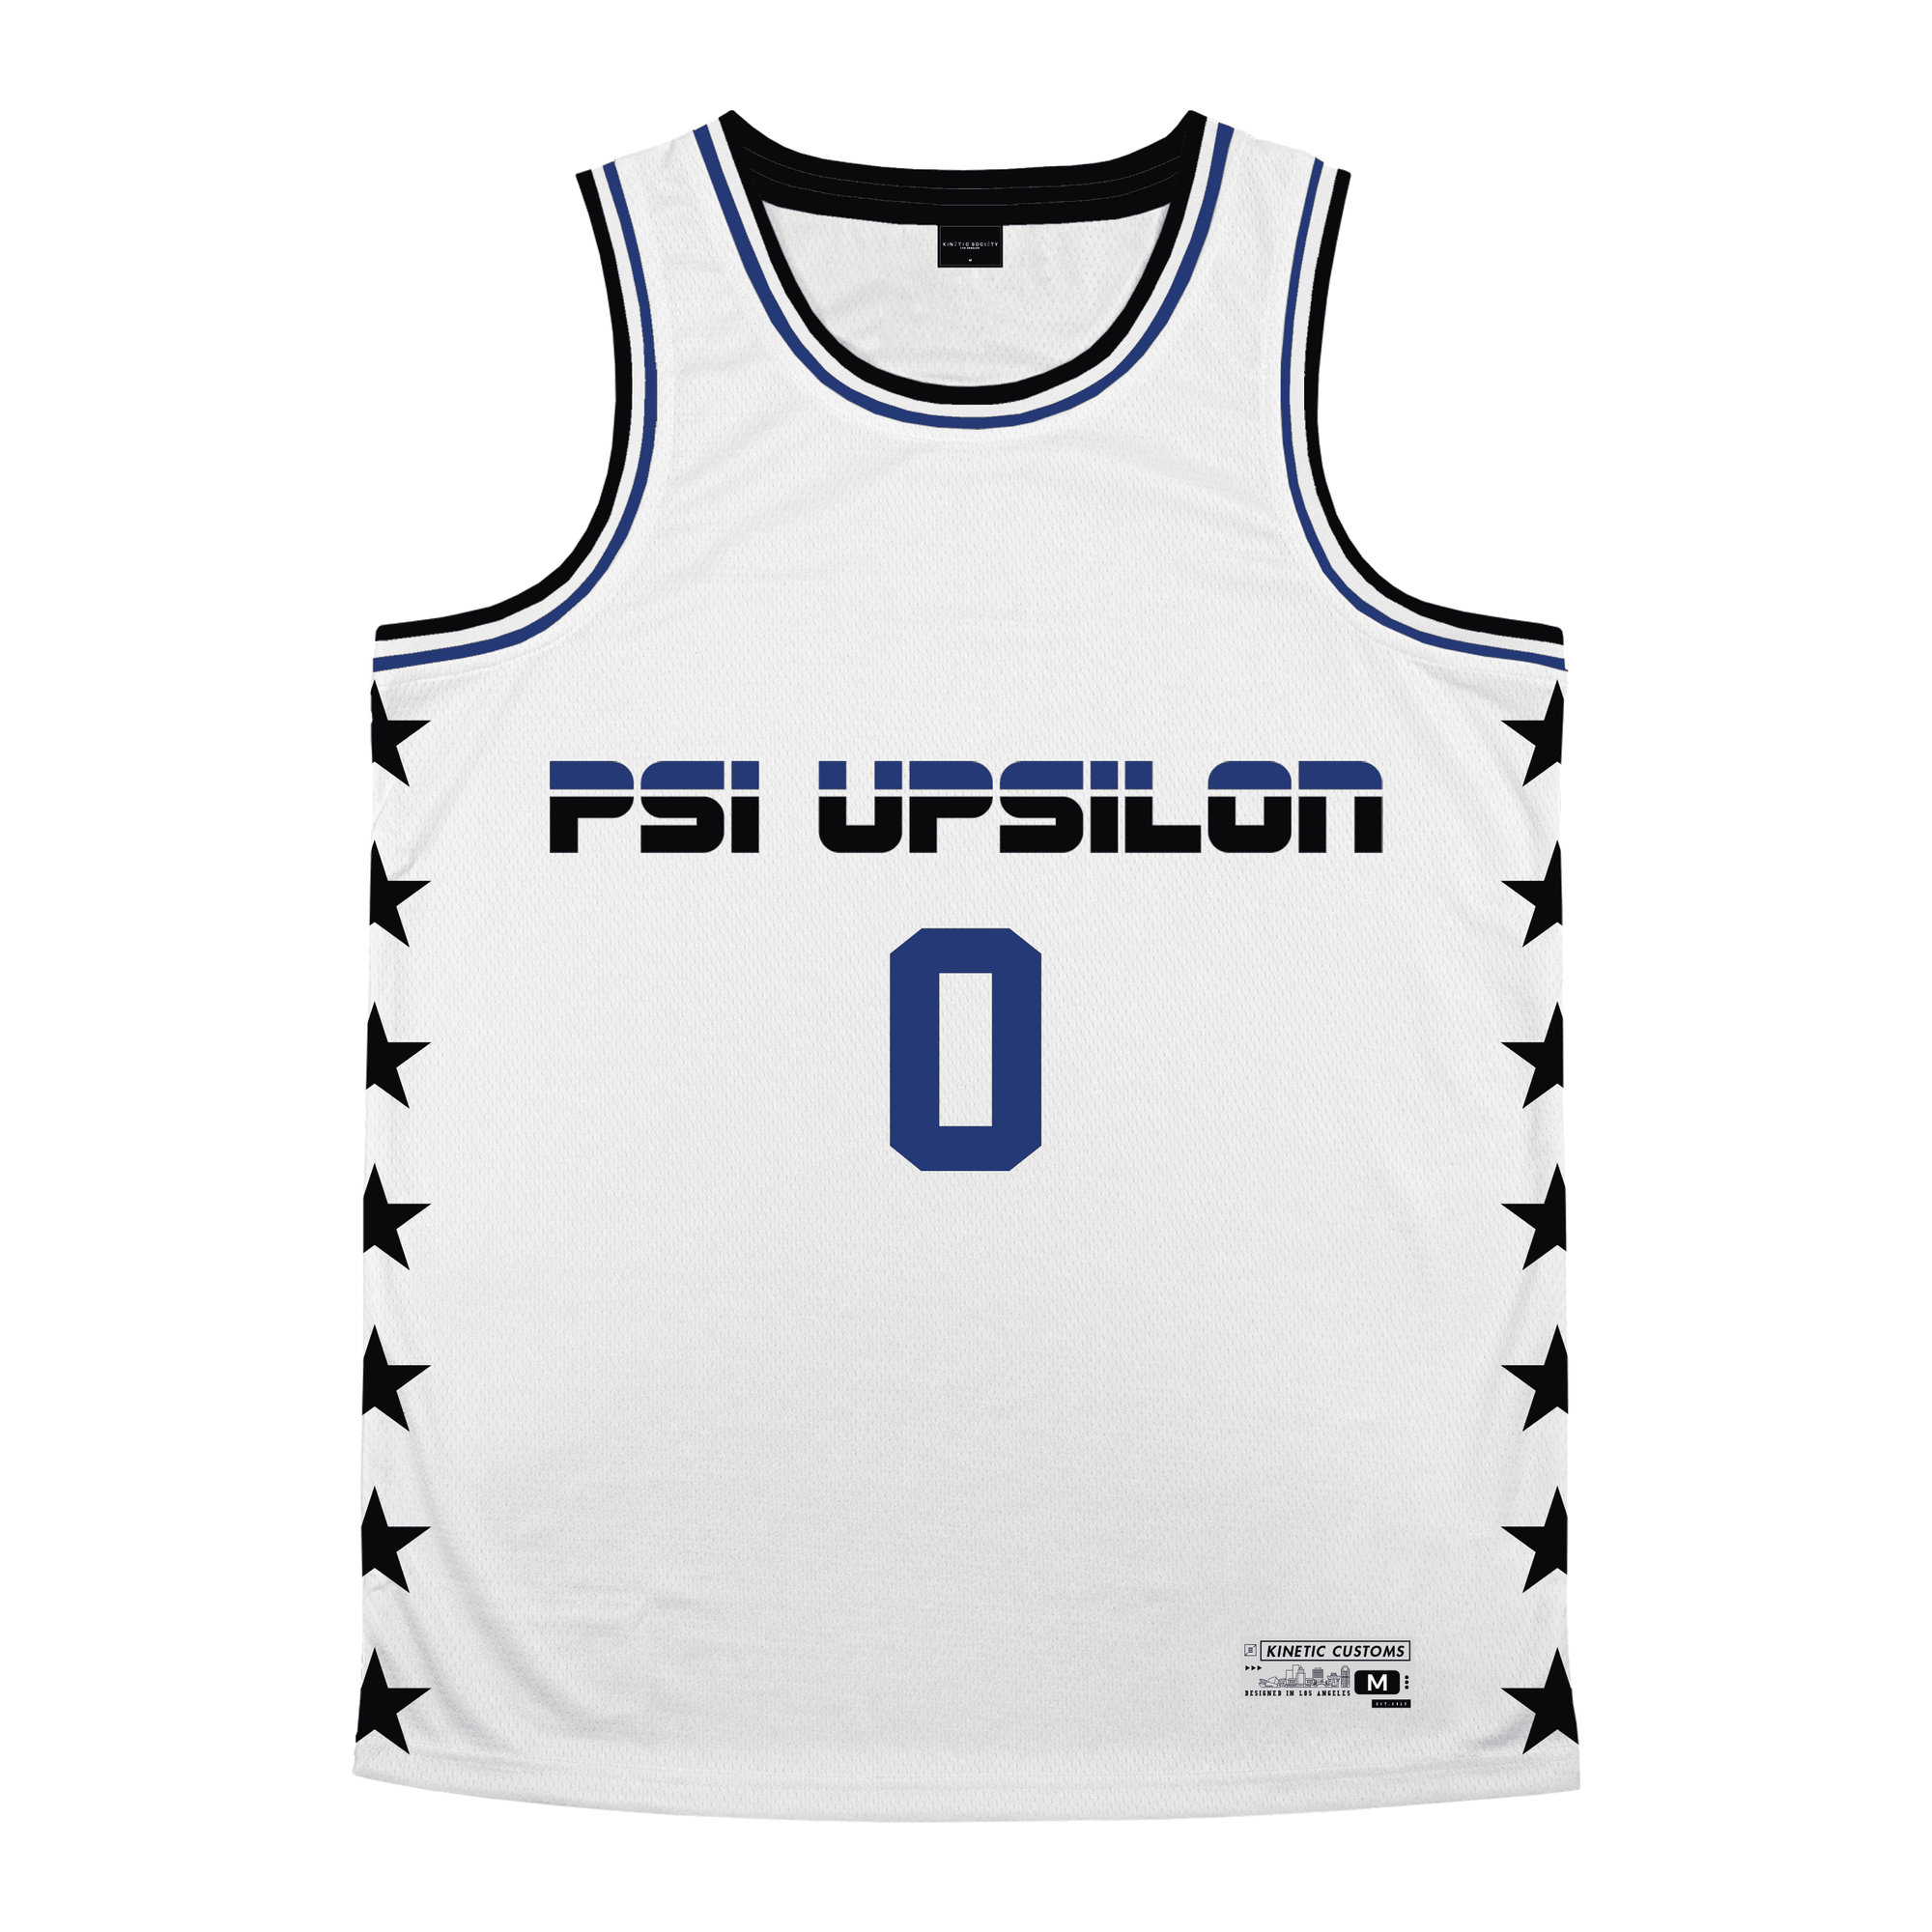 Psi Upsilon - Black Star Basketball Jersey